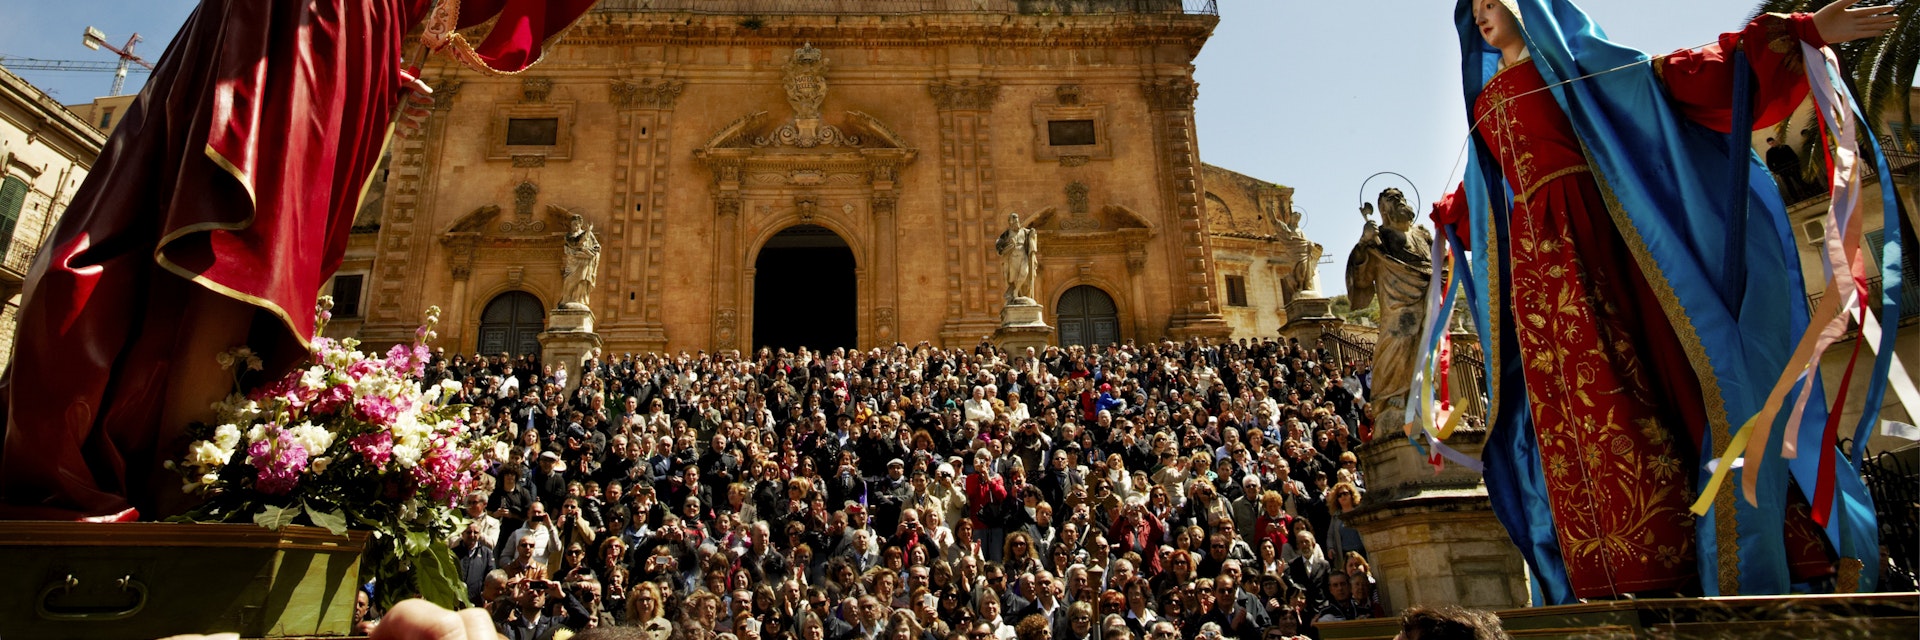 People gathered on steps of San Pietro for Madonna Vasa Vasa celebration on Easter Sunday.